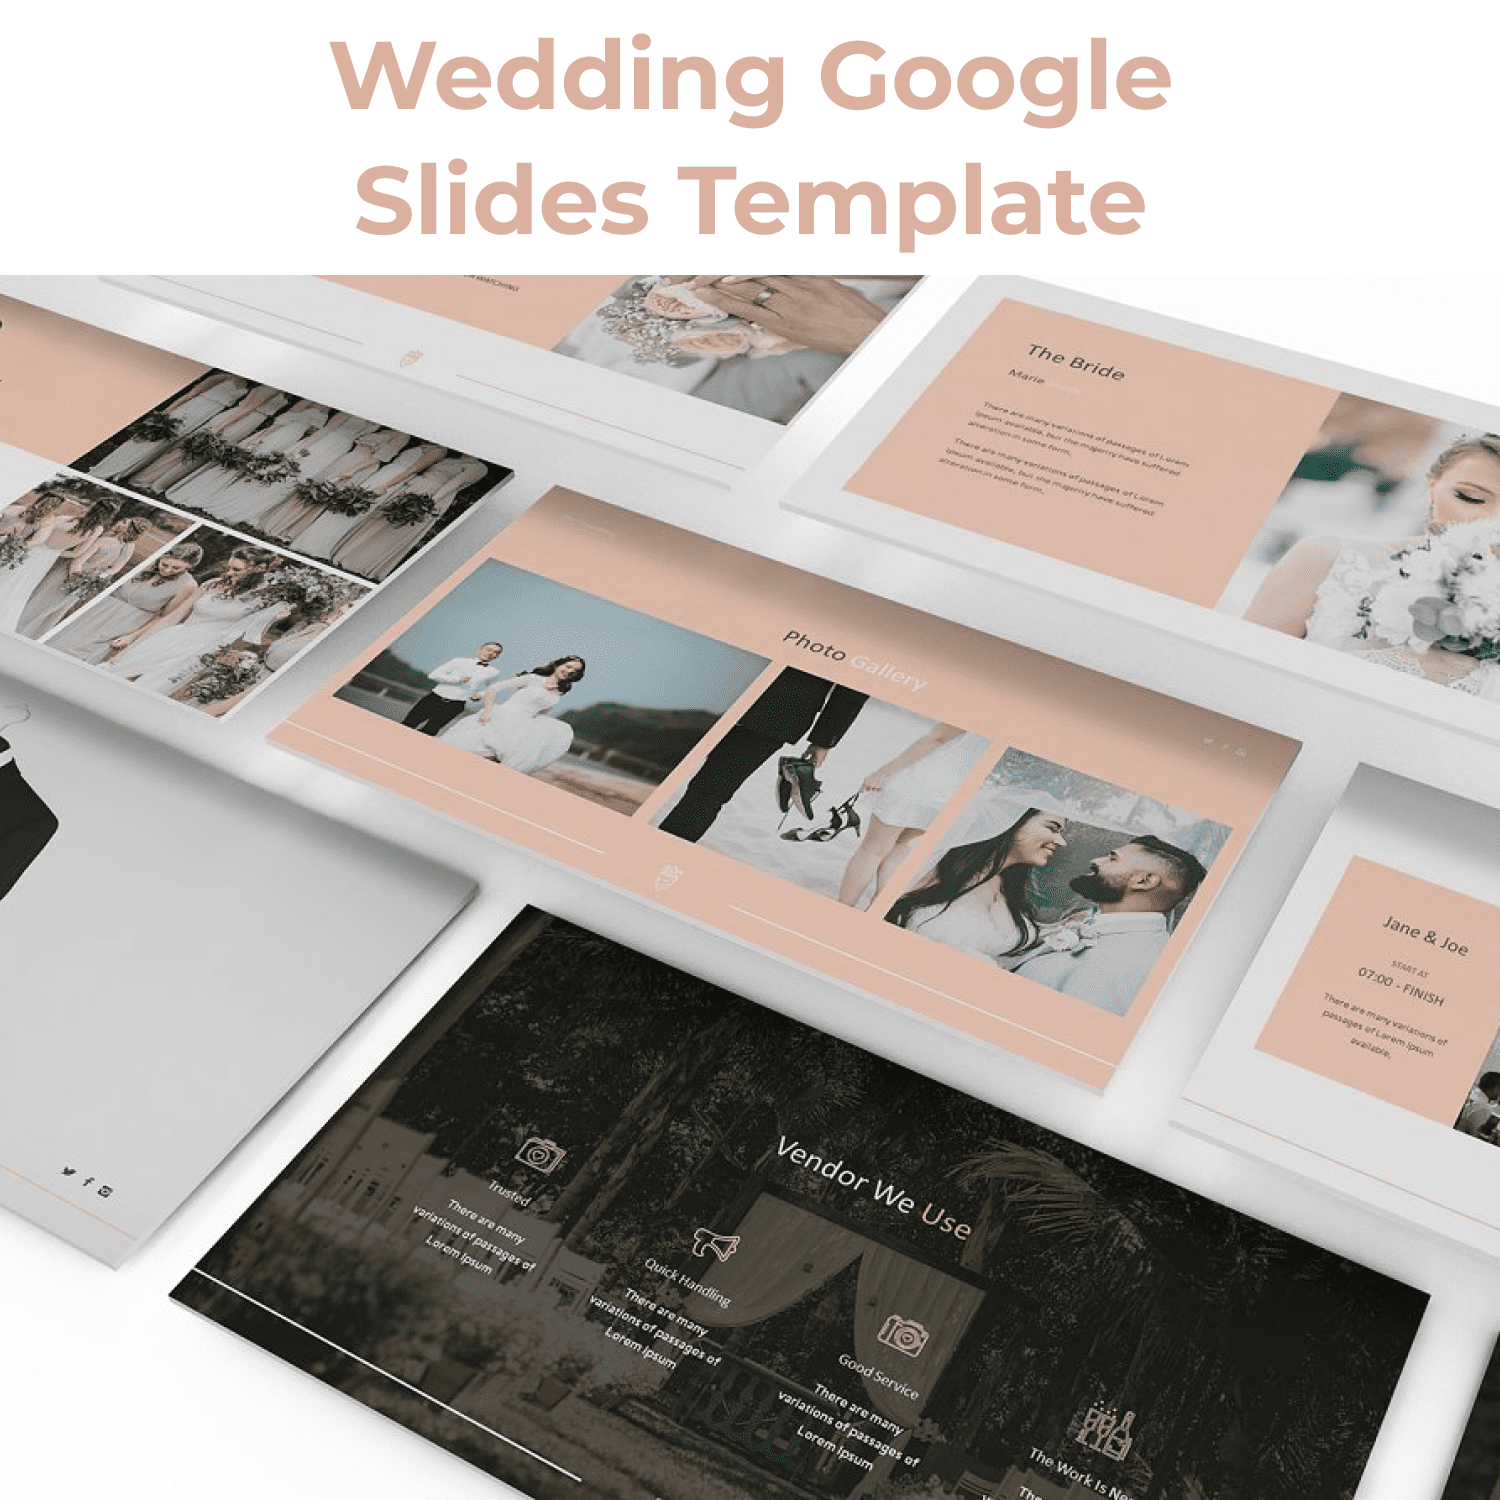 Wedding Google Slides Template cover.